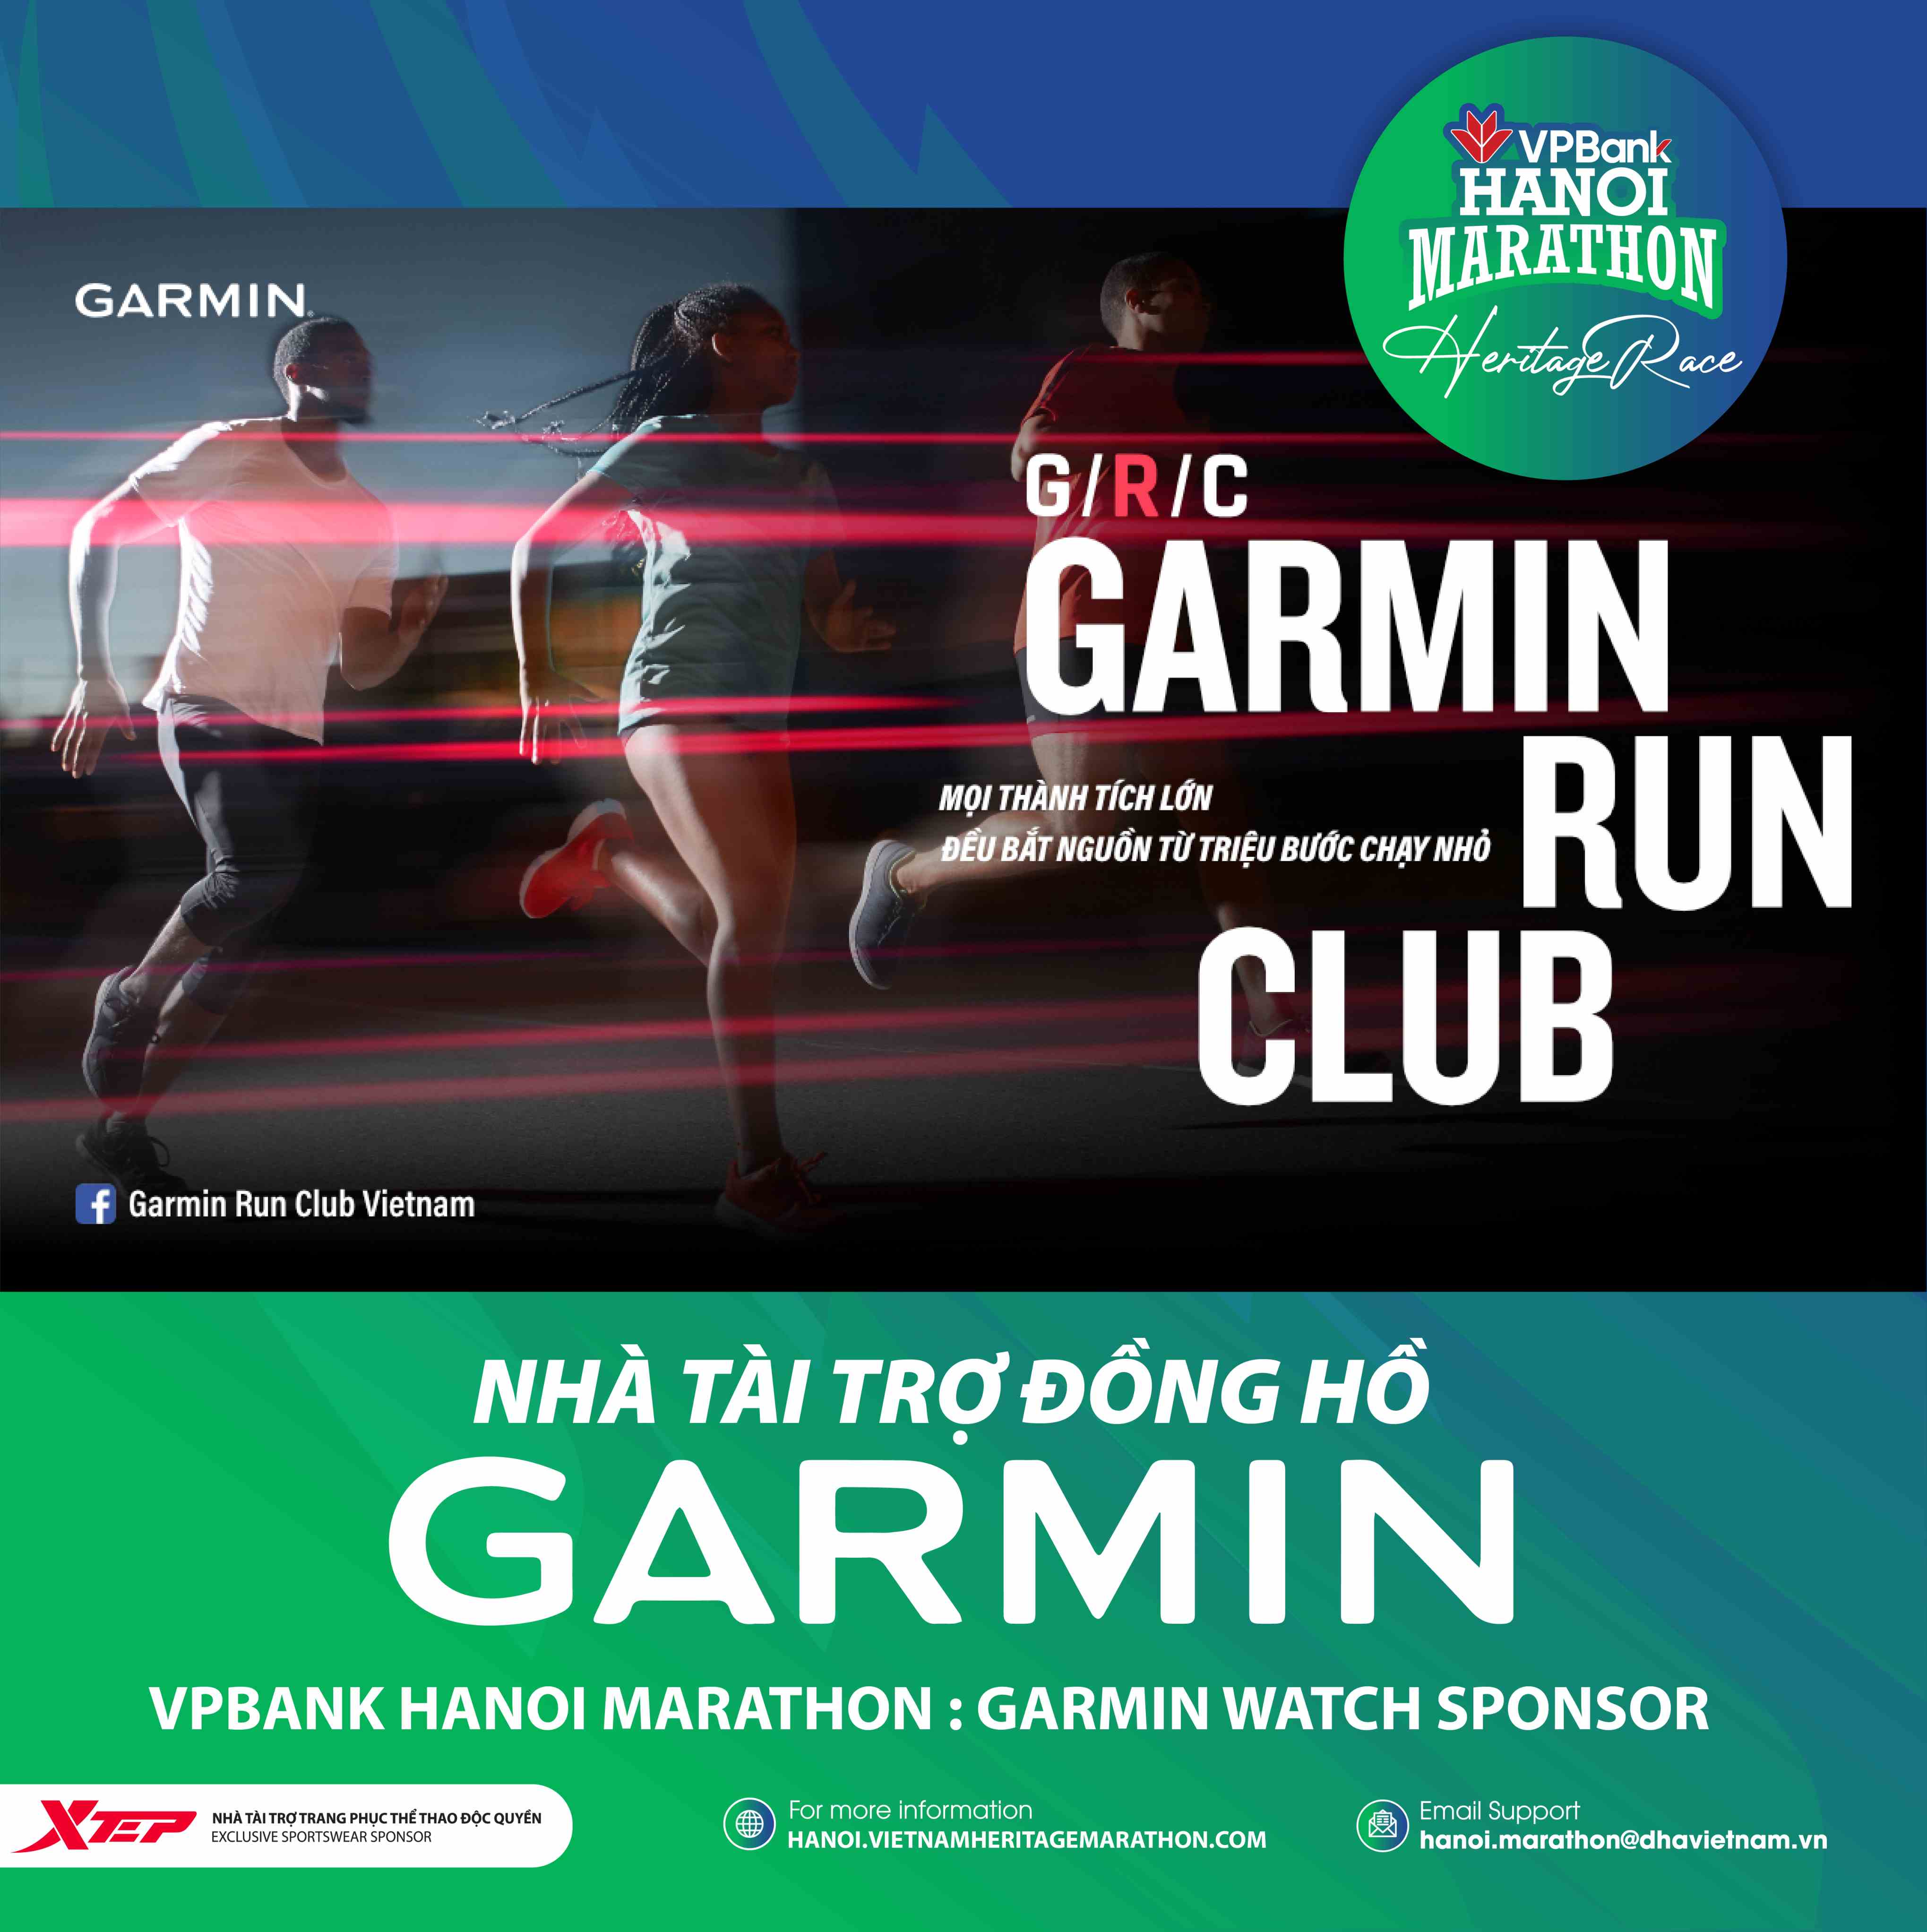 Garmin Watches Among Prizes At VPBank Hanoi Marathon 2021